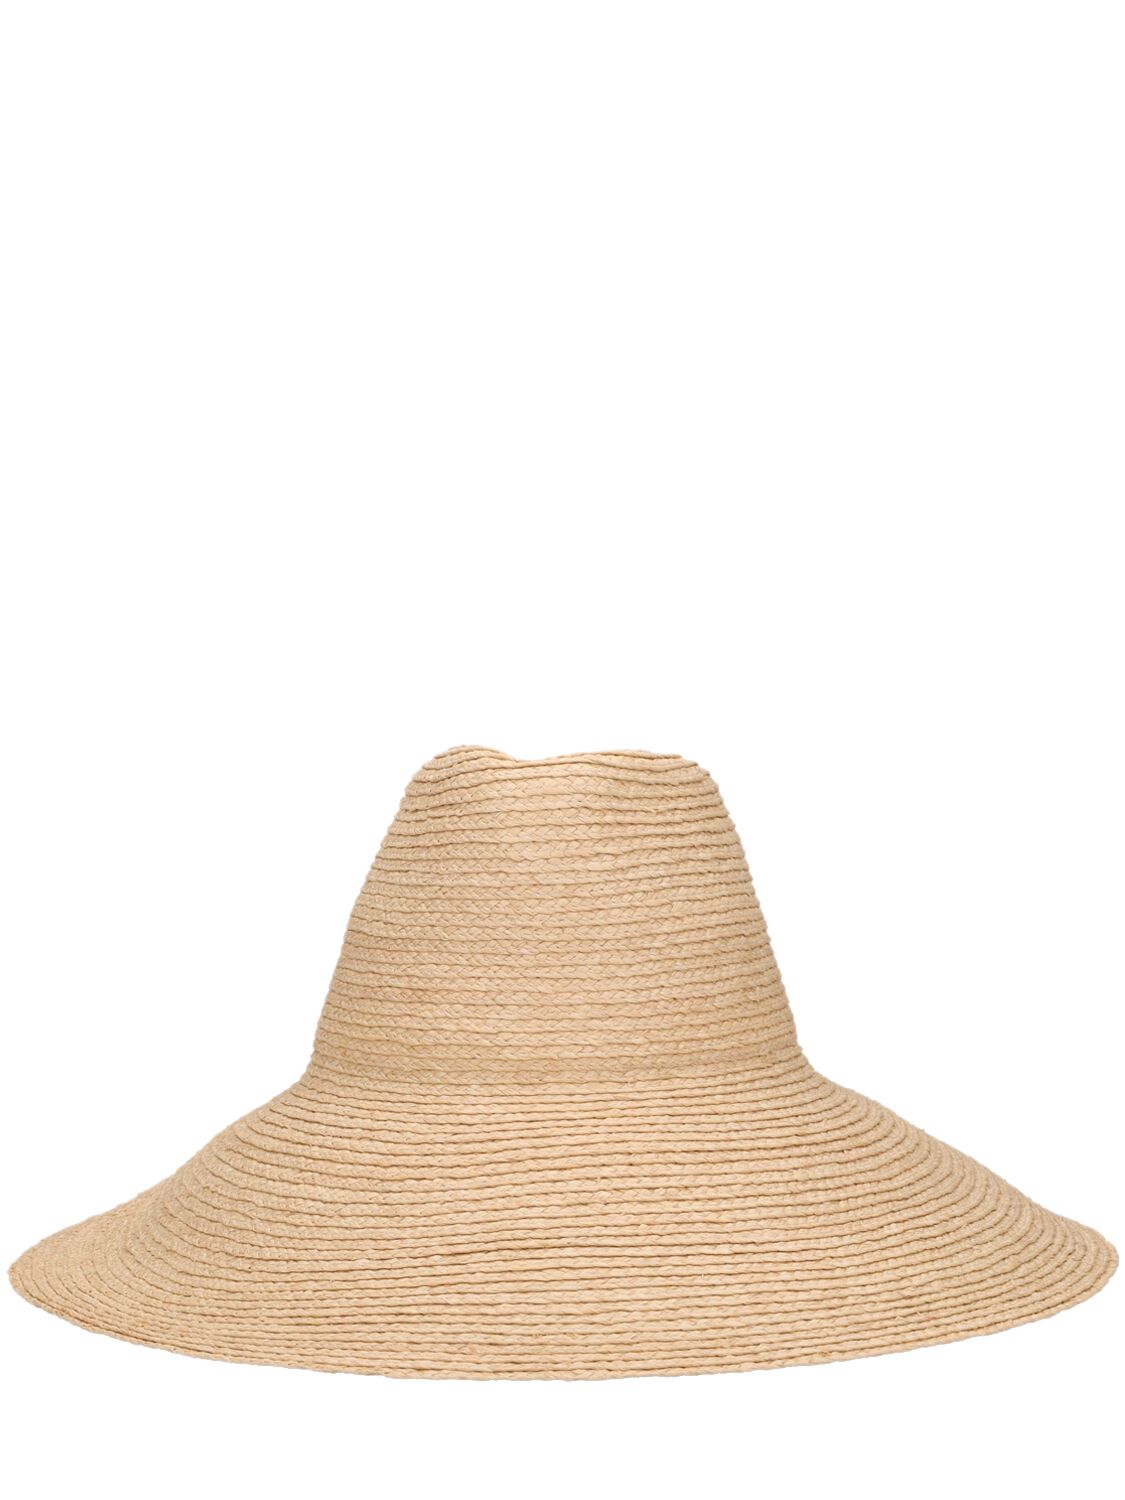 Image of Tinsley Straw Bucket Hat